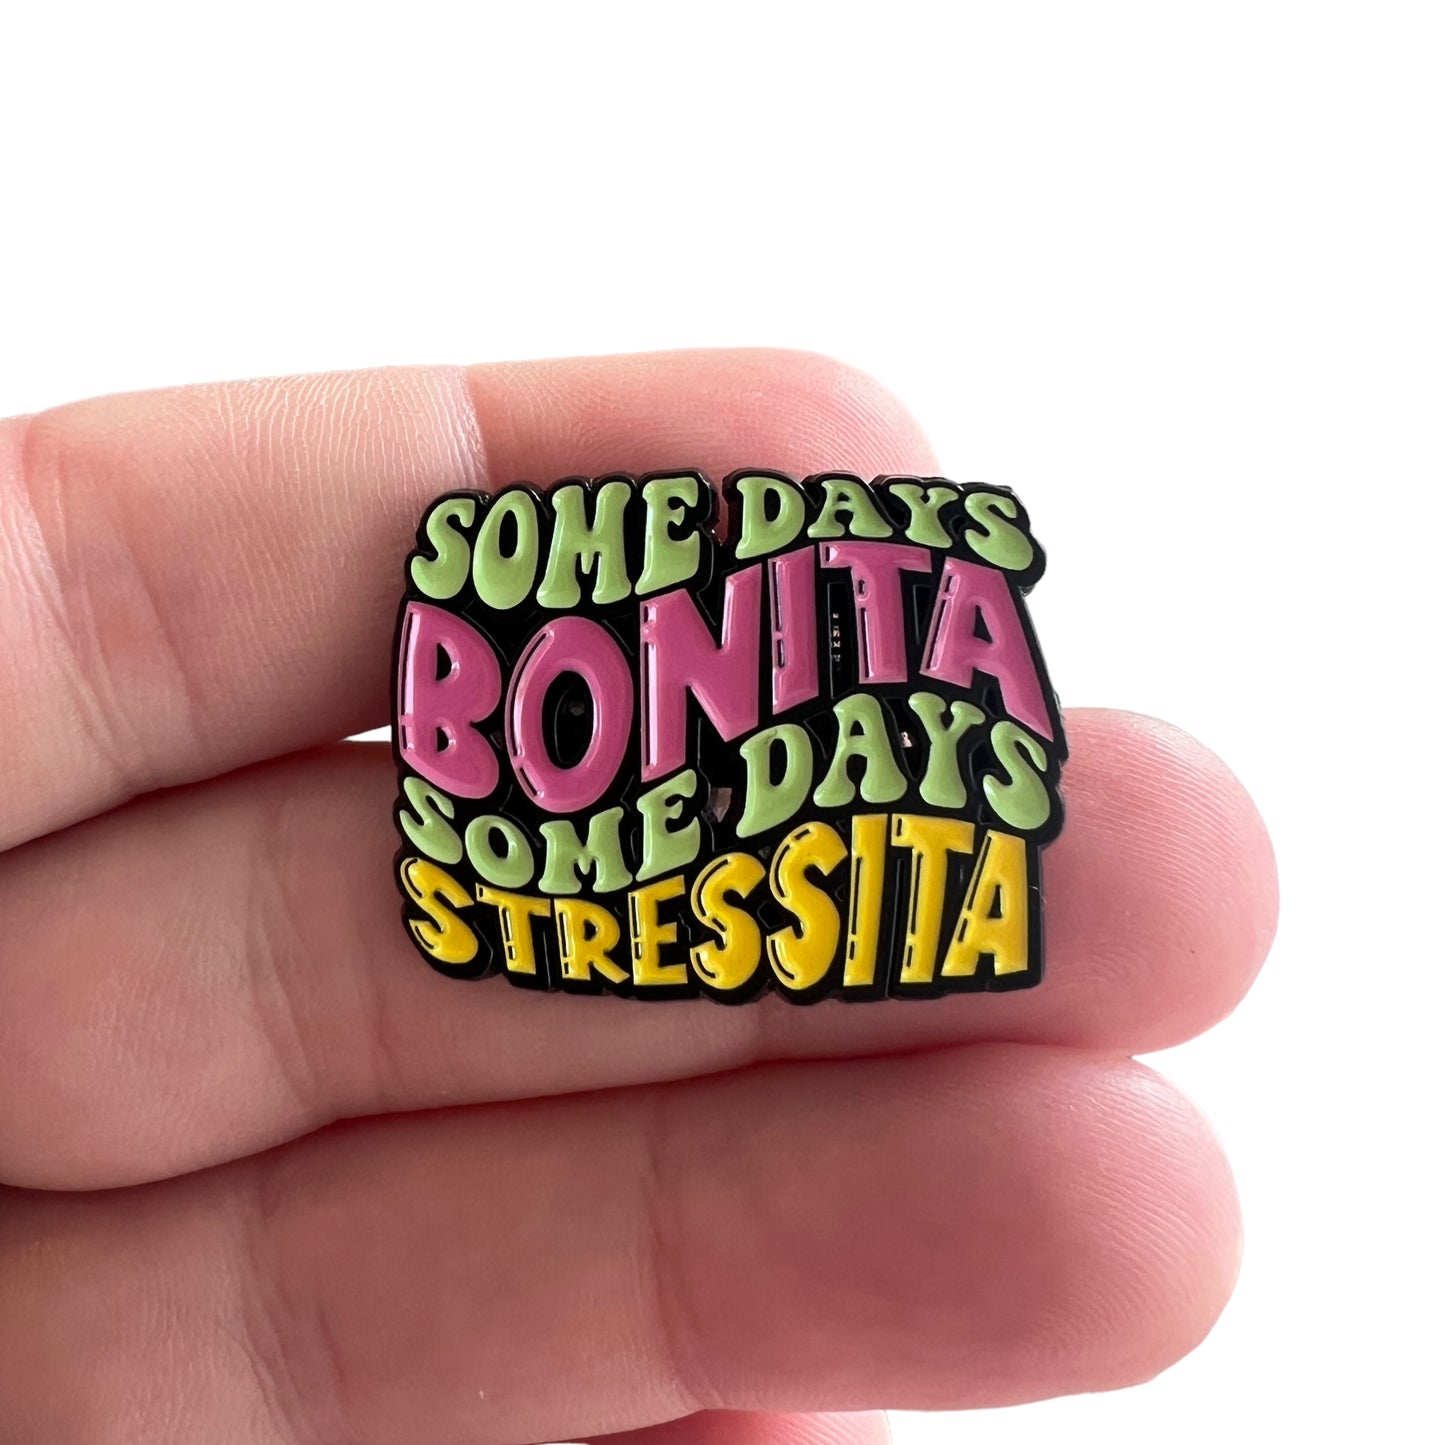 Pin — 'Some days its bonita, some days its stressita’